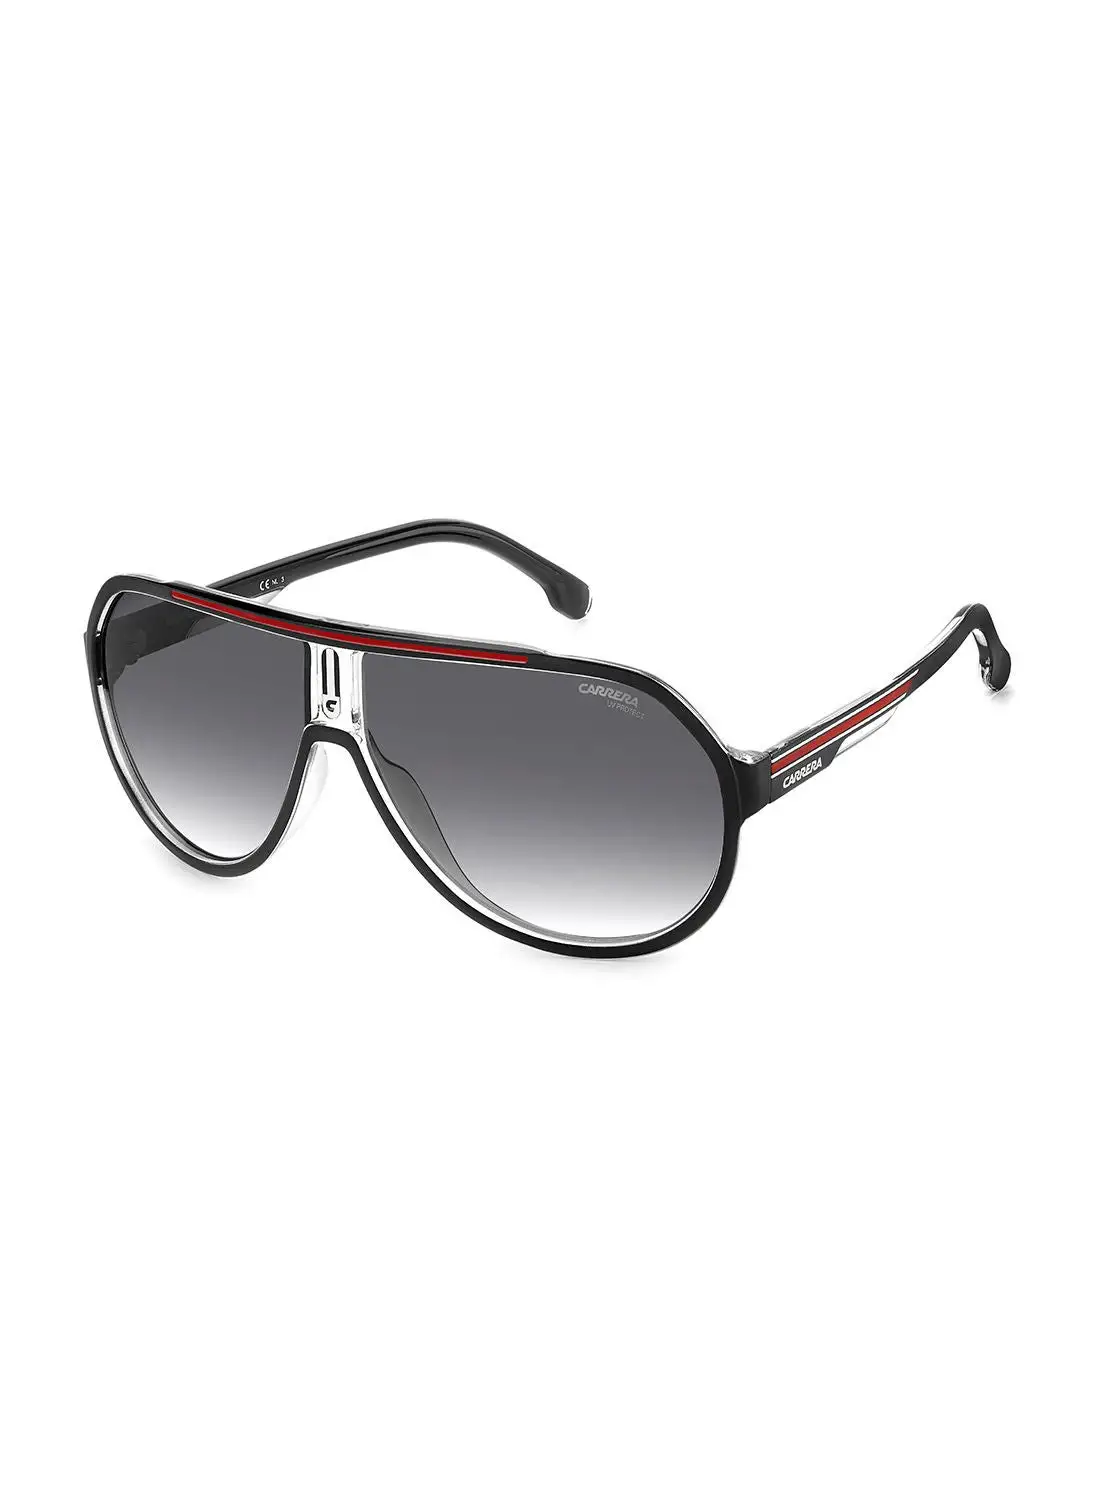 Carrera Men's UV Protection Pilot Sunglasses - Carrera 1057/S Black/Red 64 - Lens Size: 64 Mm